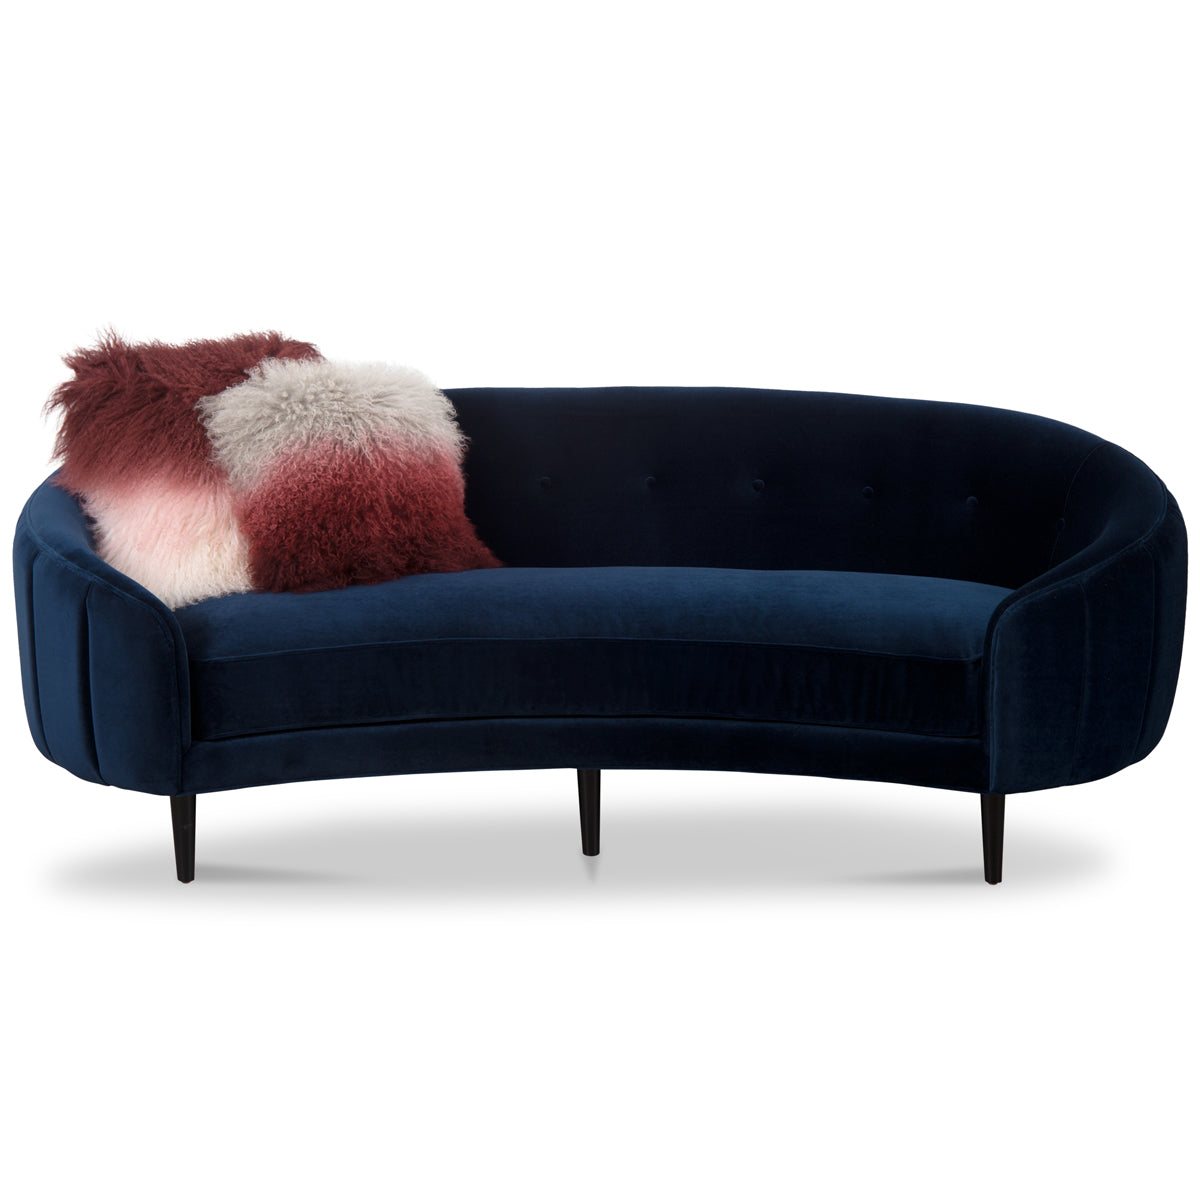 Art Deco Petite Sofa with Channel Tufted Back - ModShop1.com